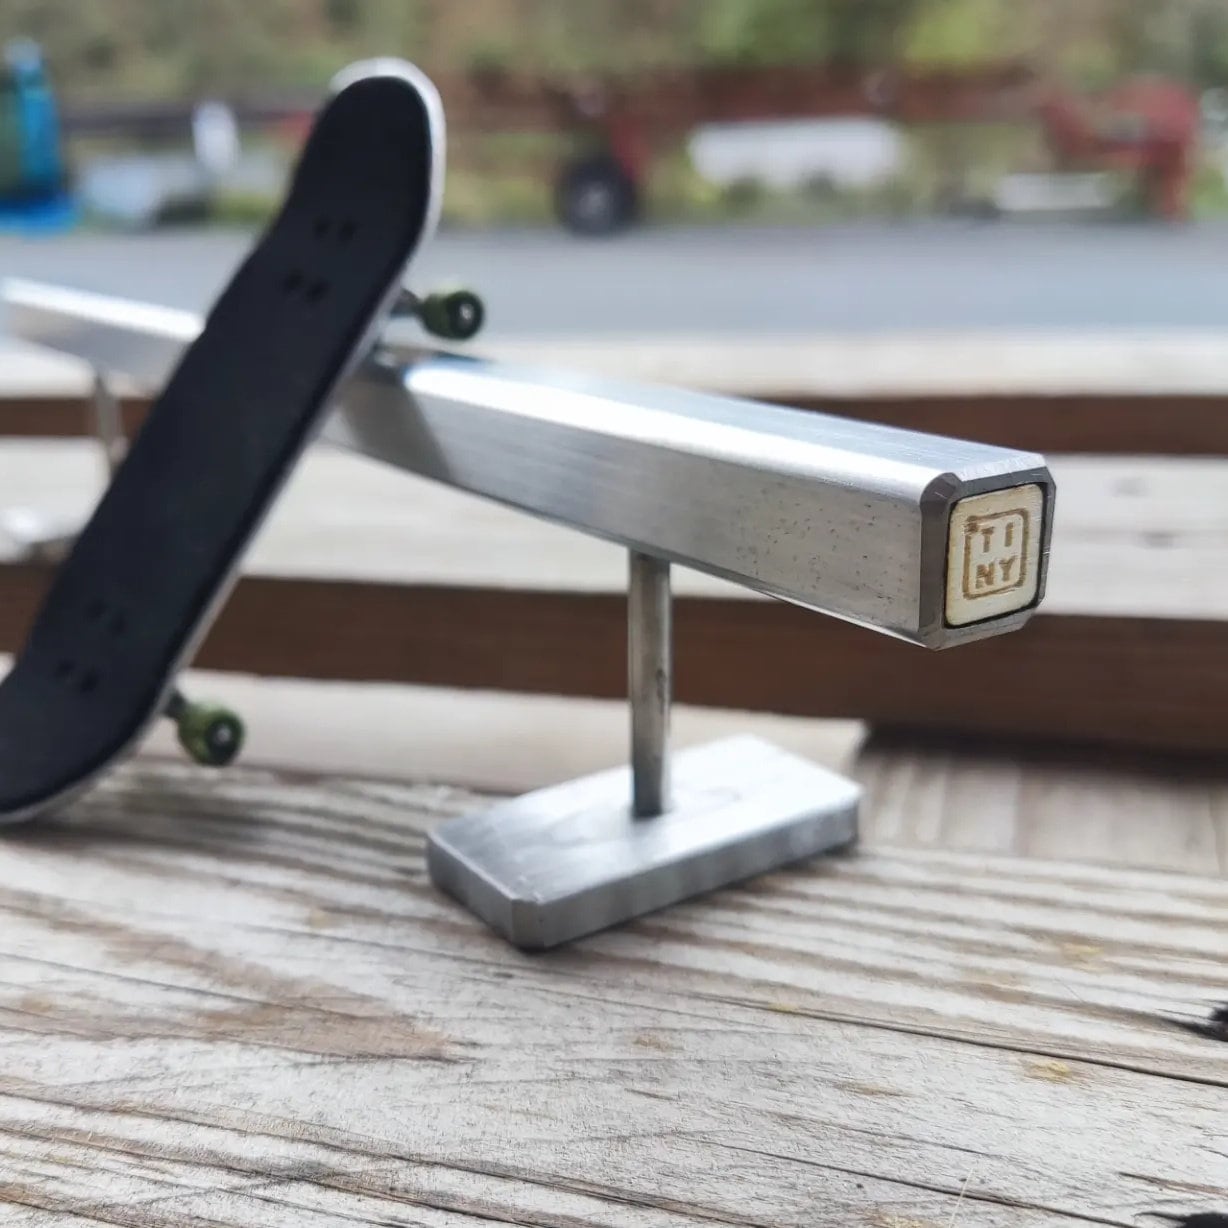 Skateboards à doigts avec mini alliage professionnel, terrasse